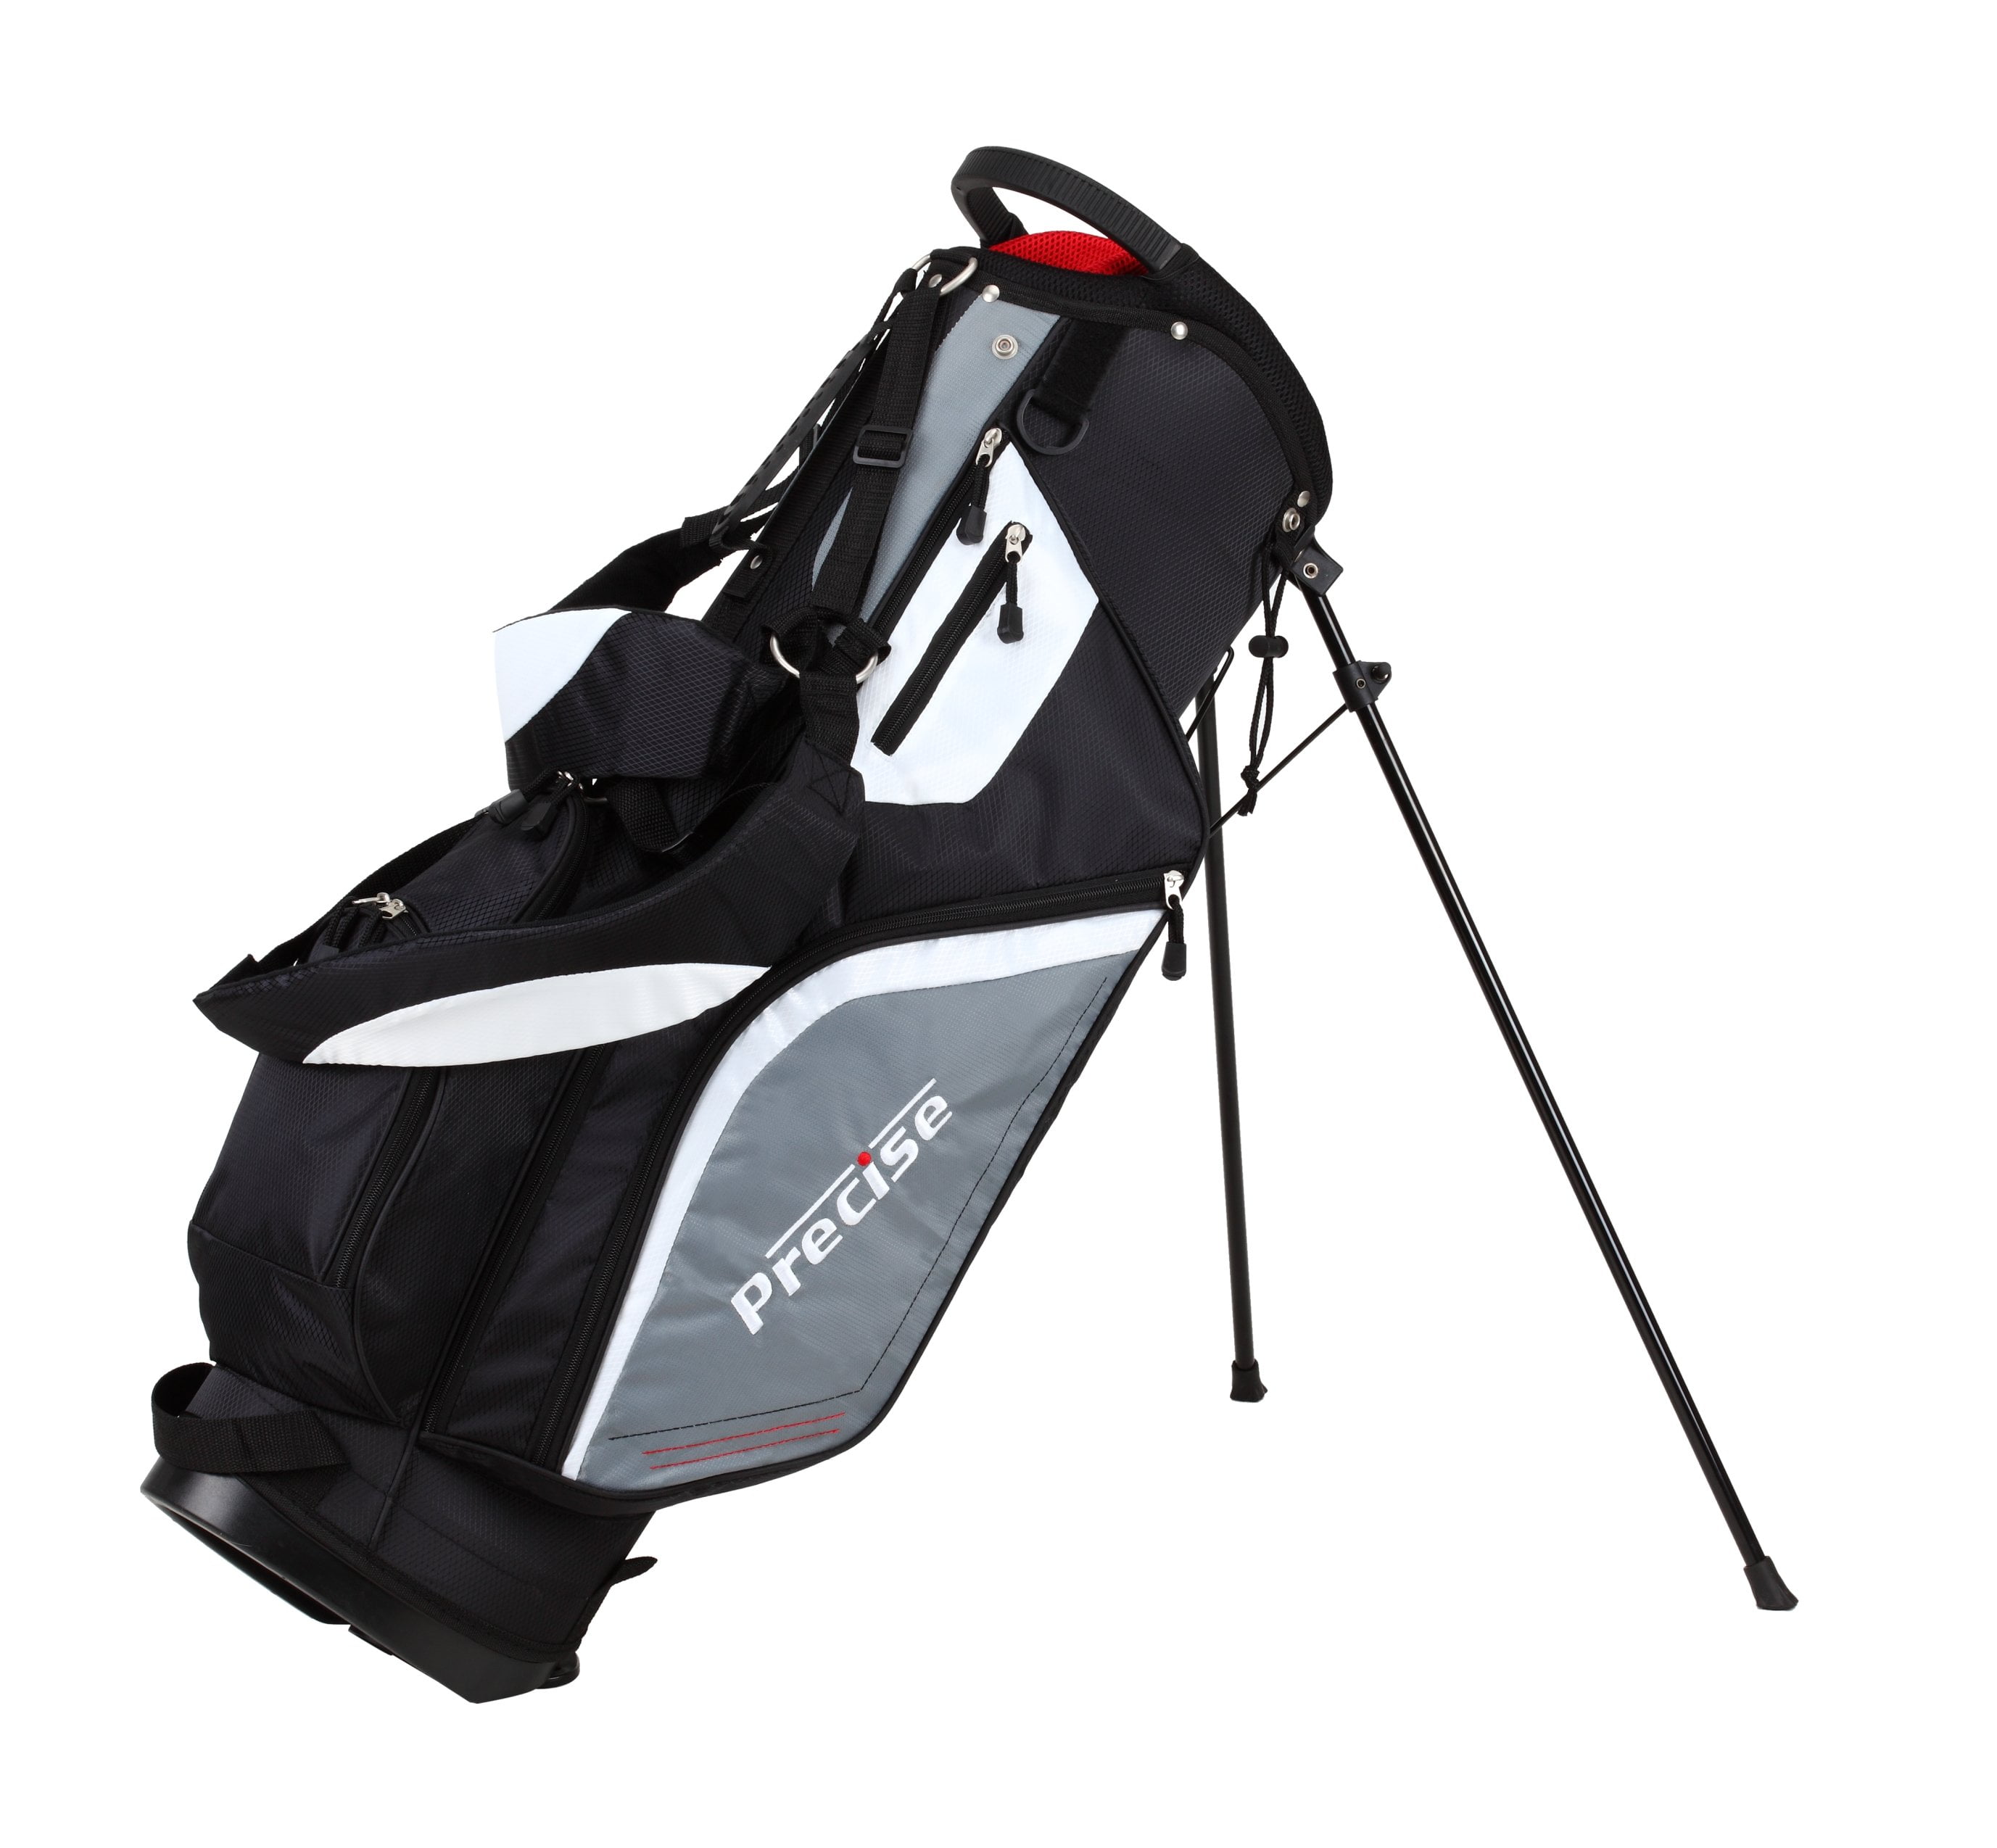 Precise Naturals M5 Men's Complete Golf Clubs Package Set, Black 